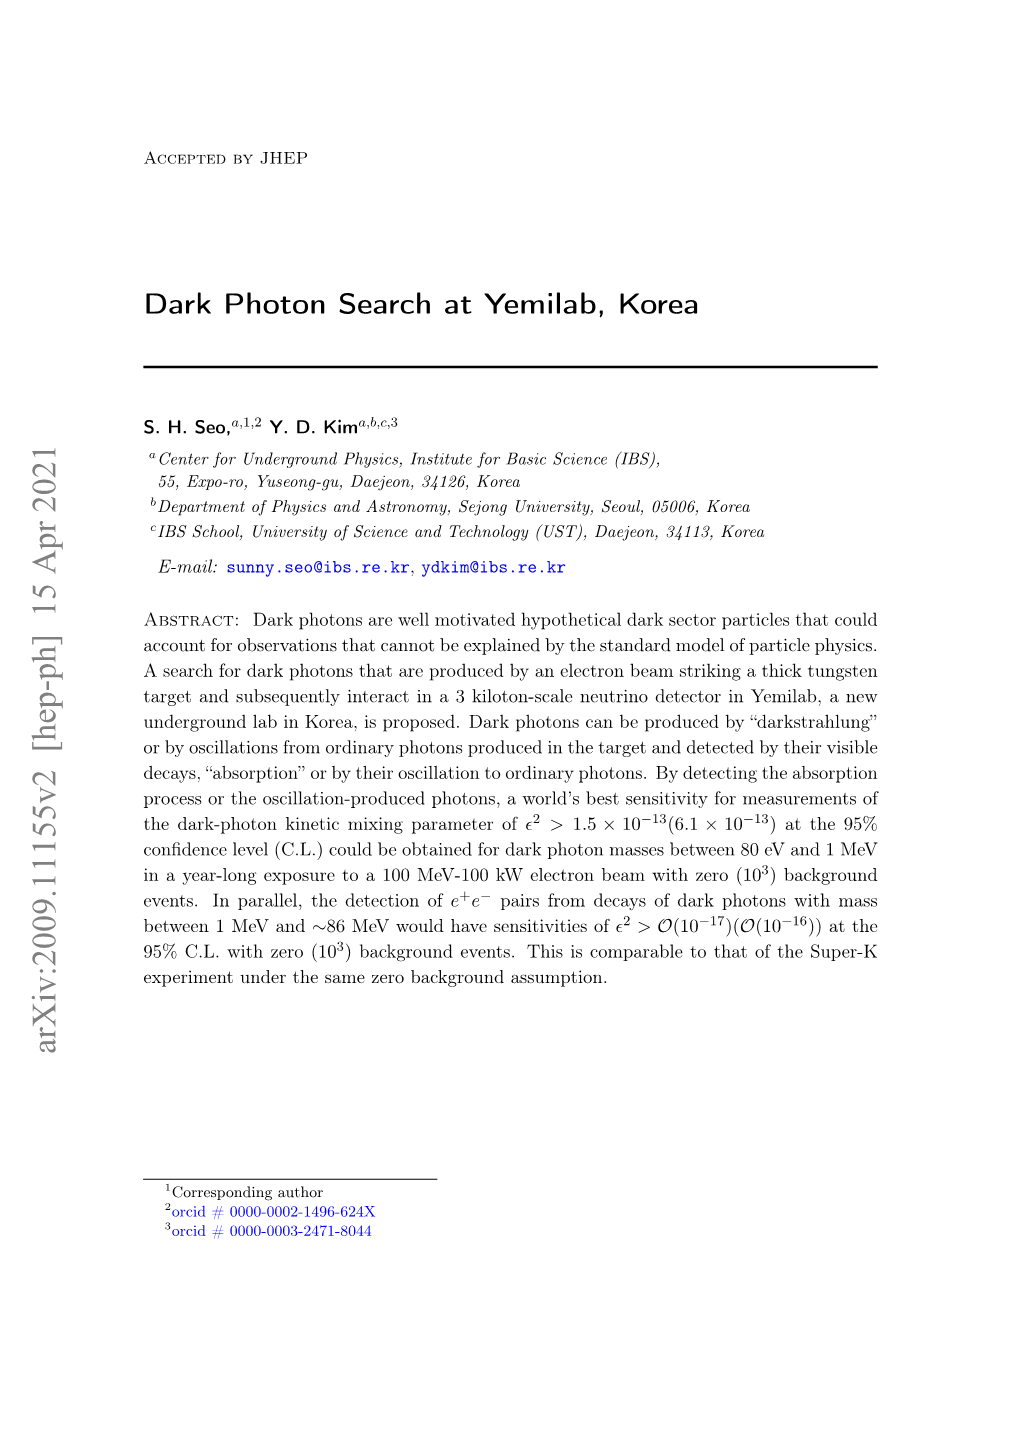 Dark Photon Search at Yemilab, Korea